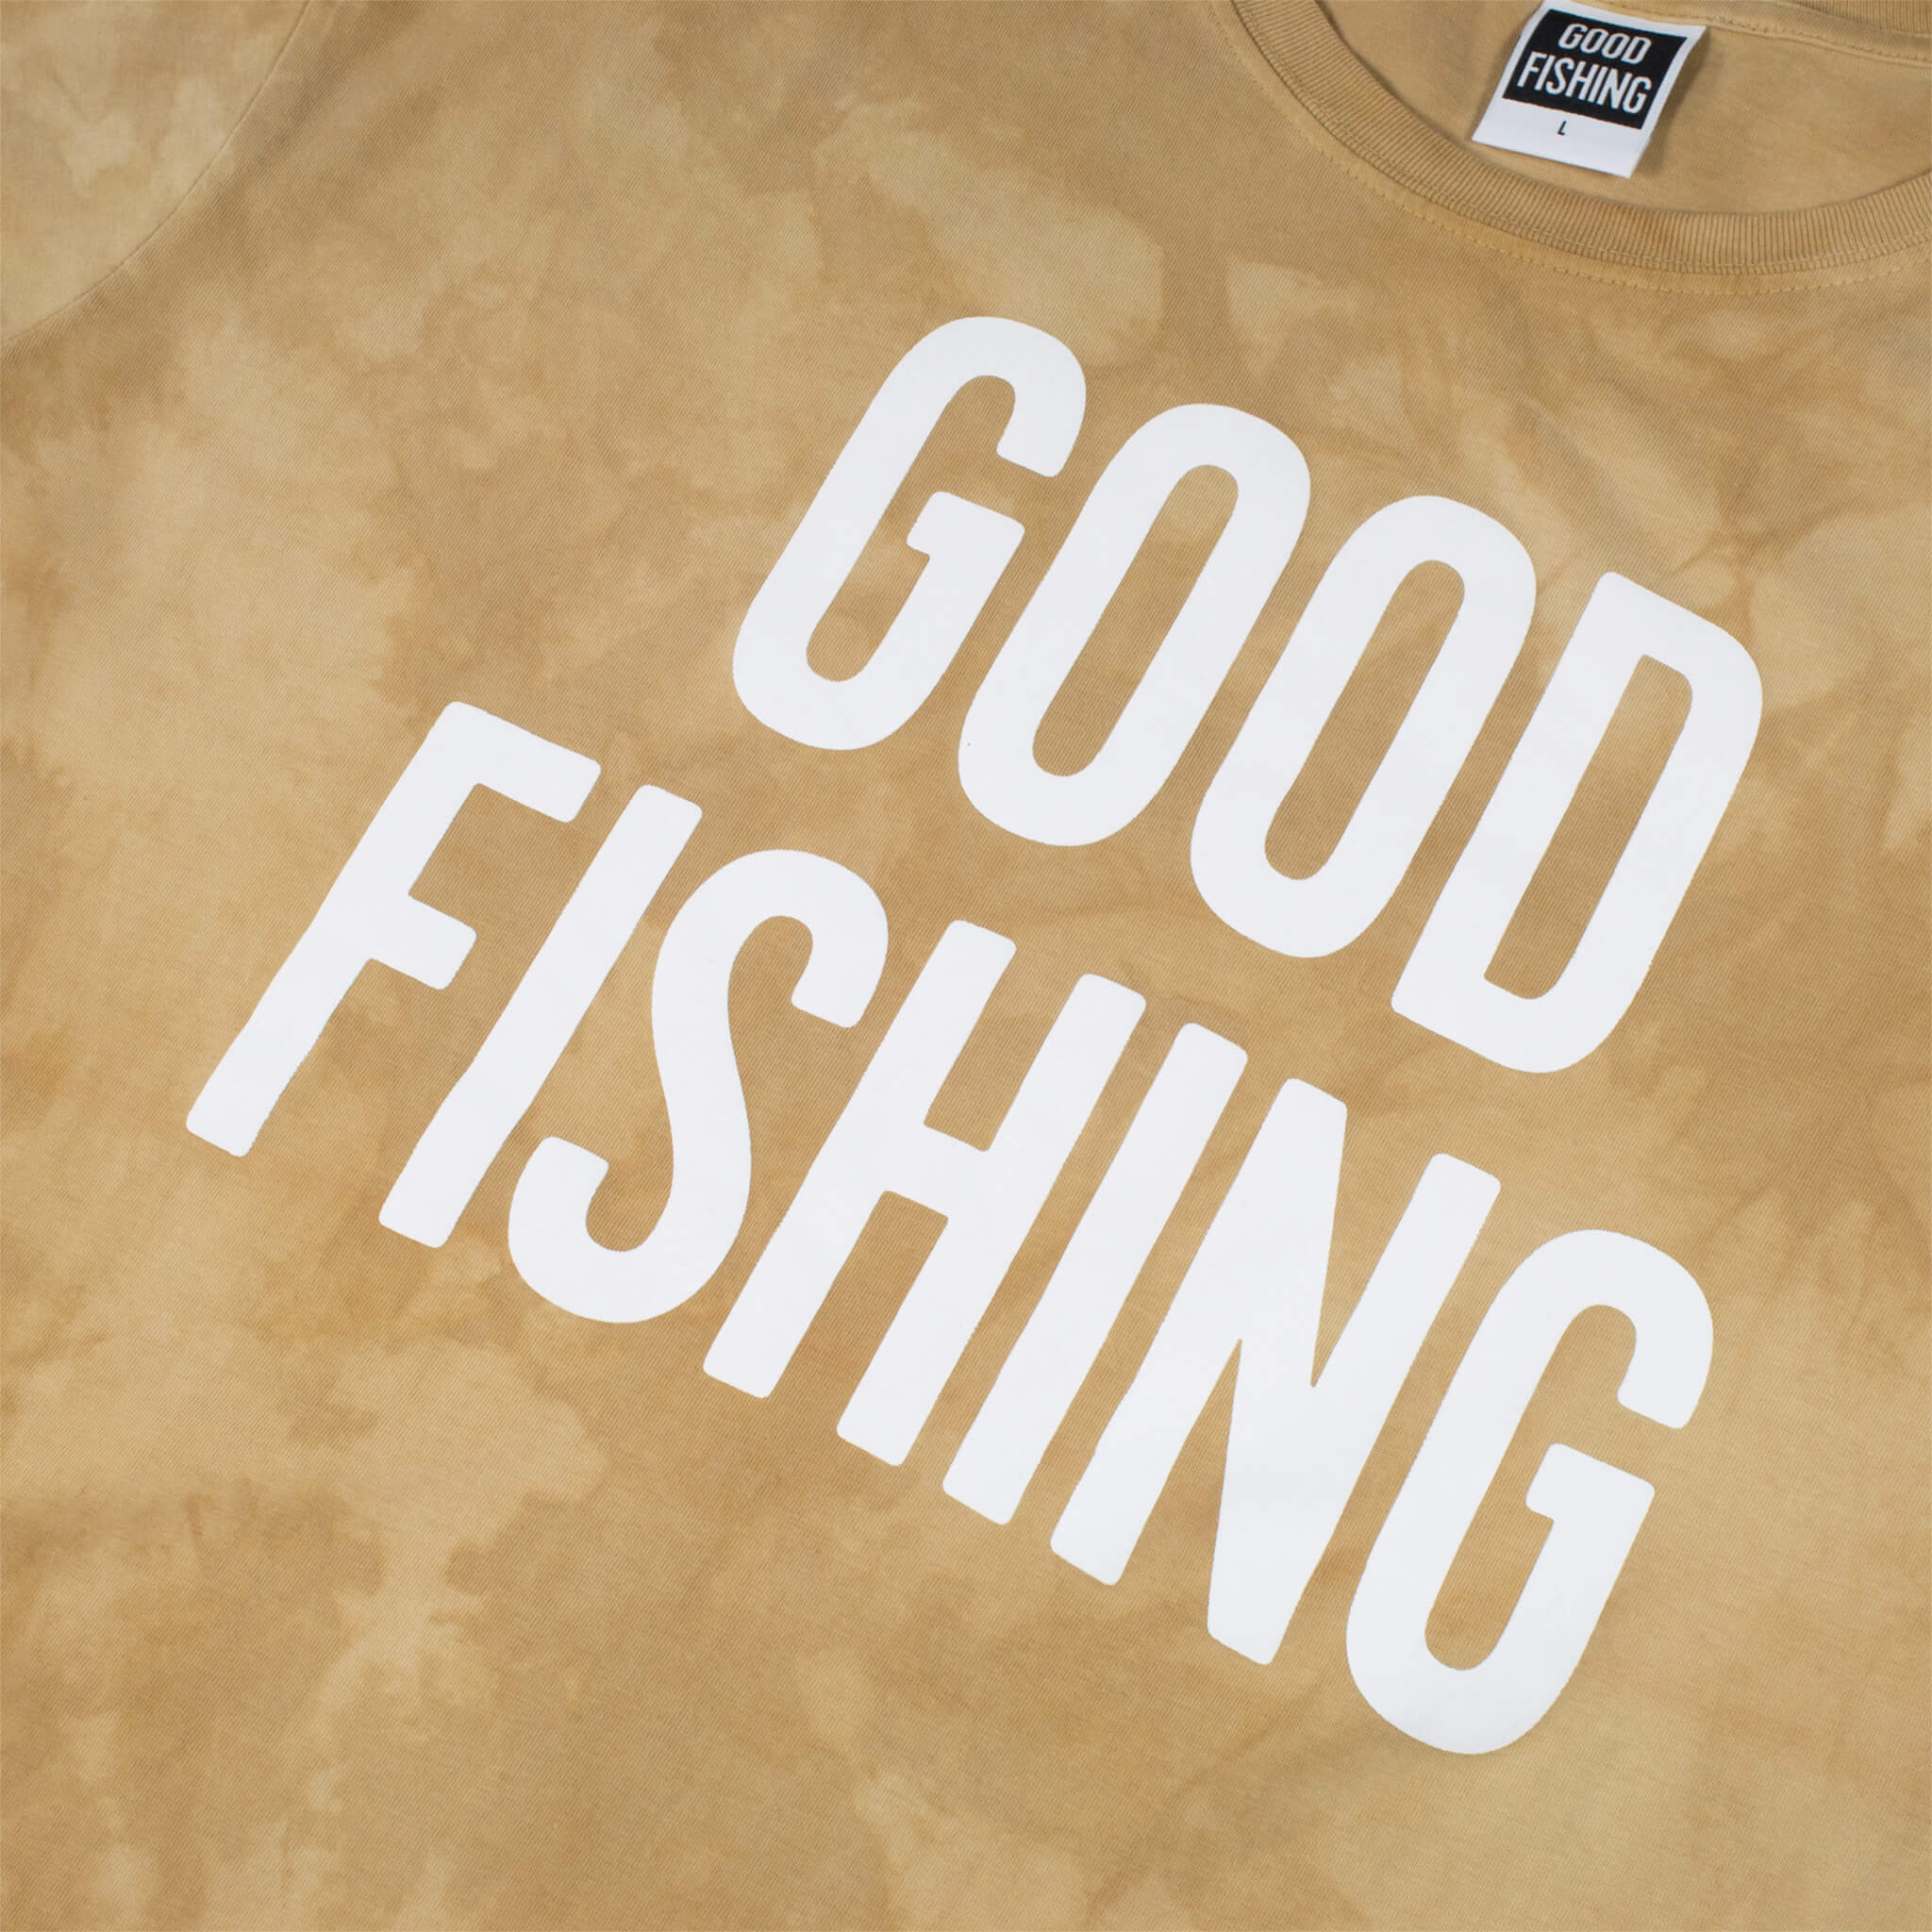 Good_Fishing_Standard_Logo_Organic_Cotton_T-Shirt_Hand-Dyed_Cutch_2.jpg